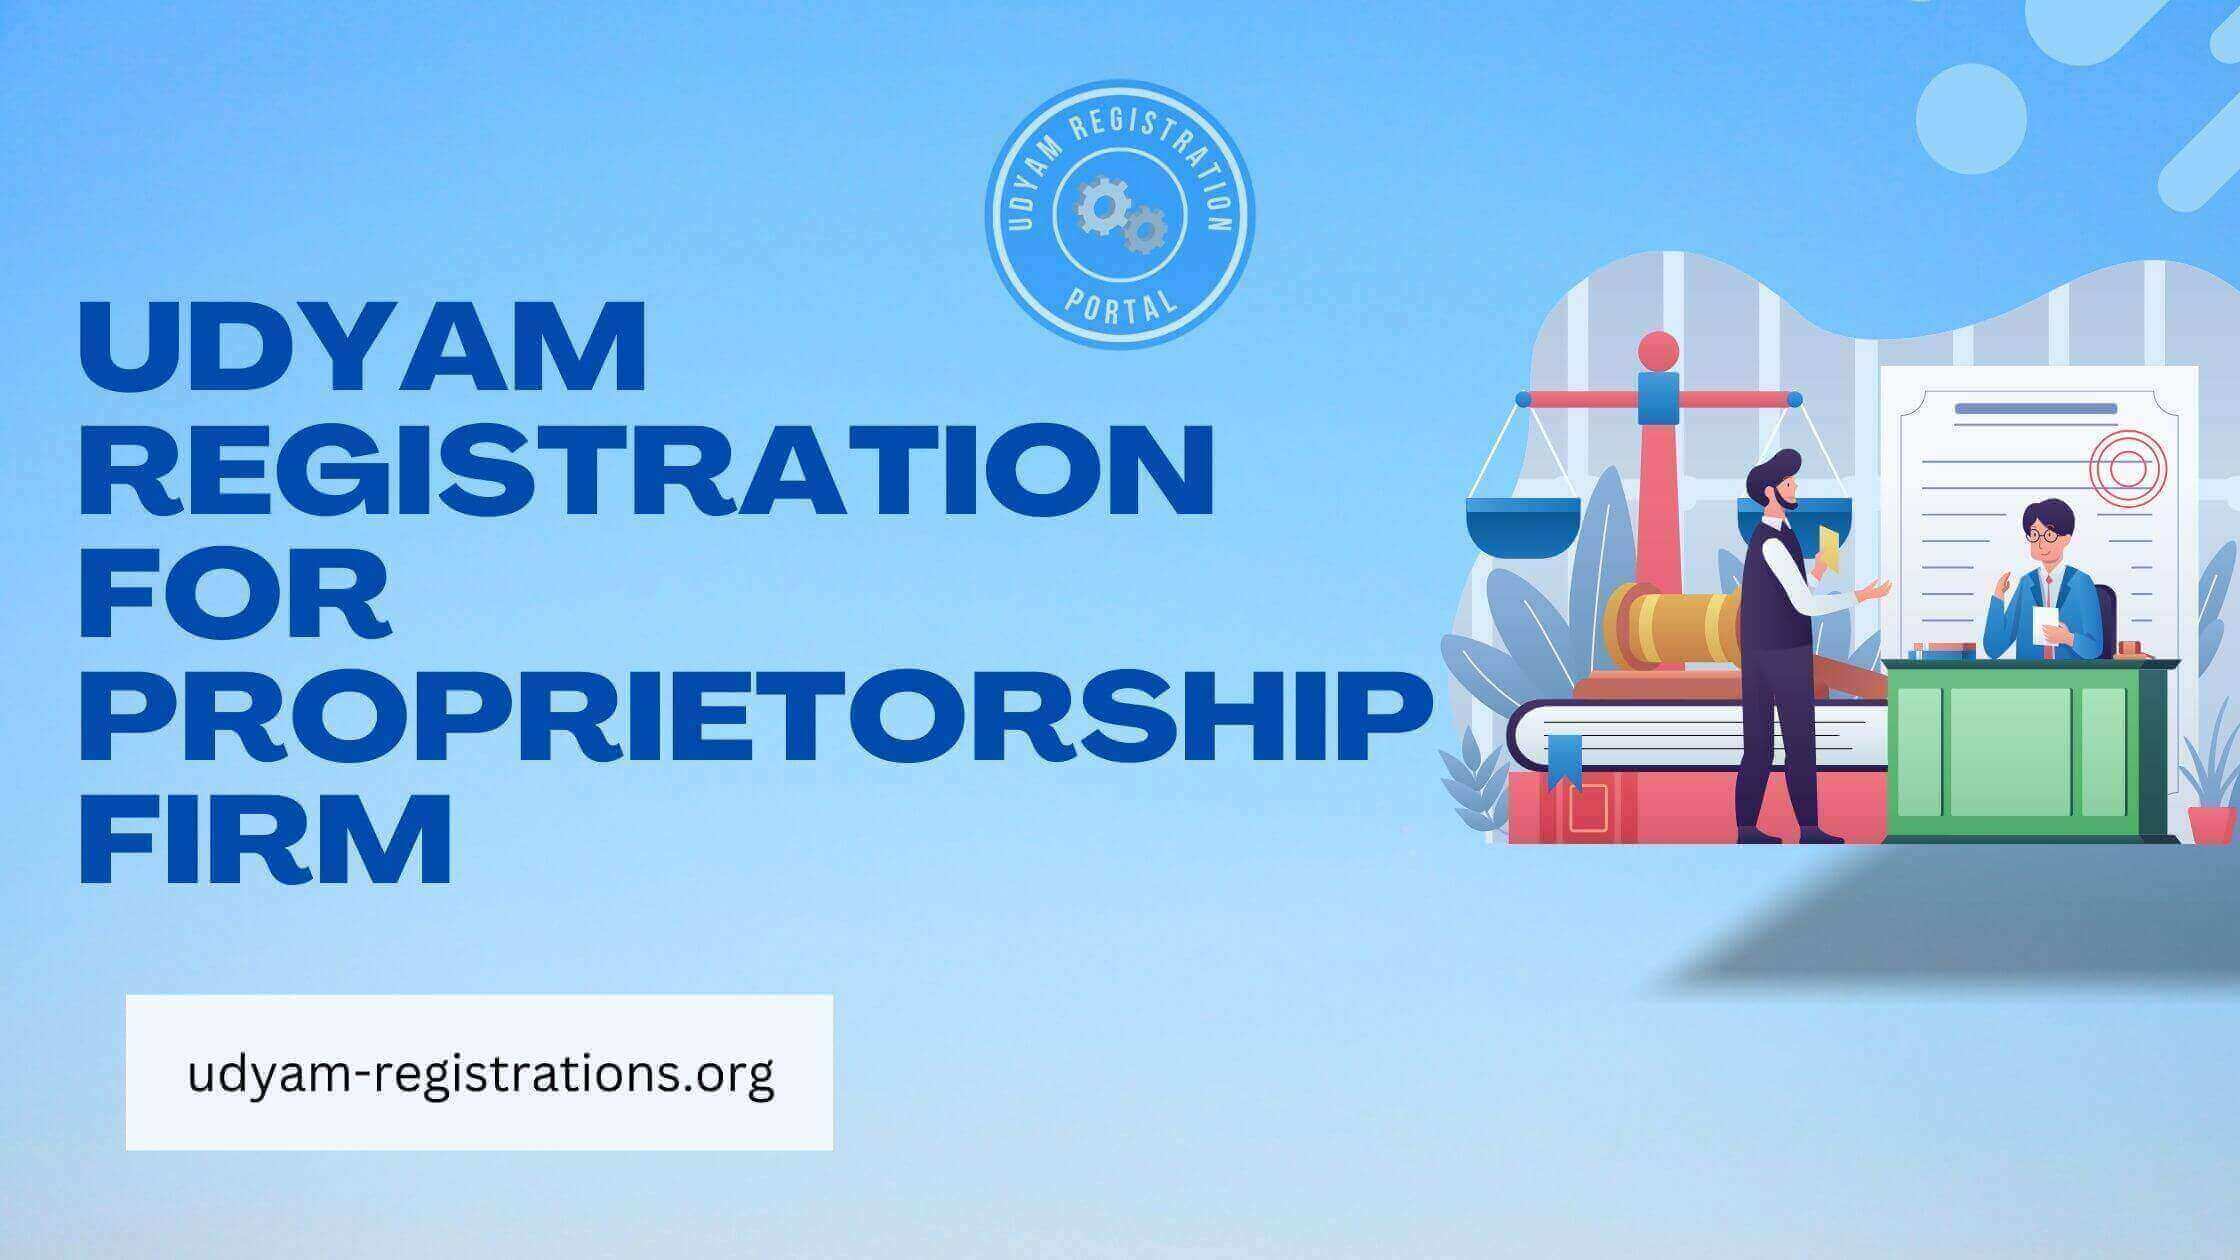 Udyam Registration for Proprietorship Firm